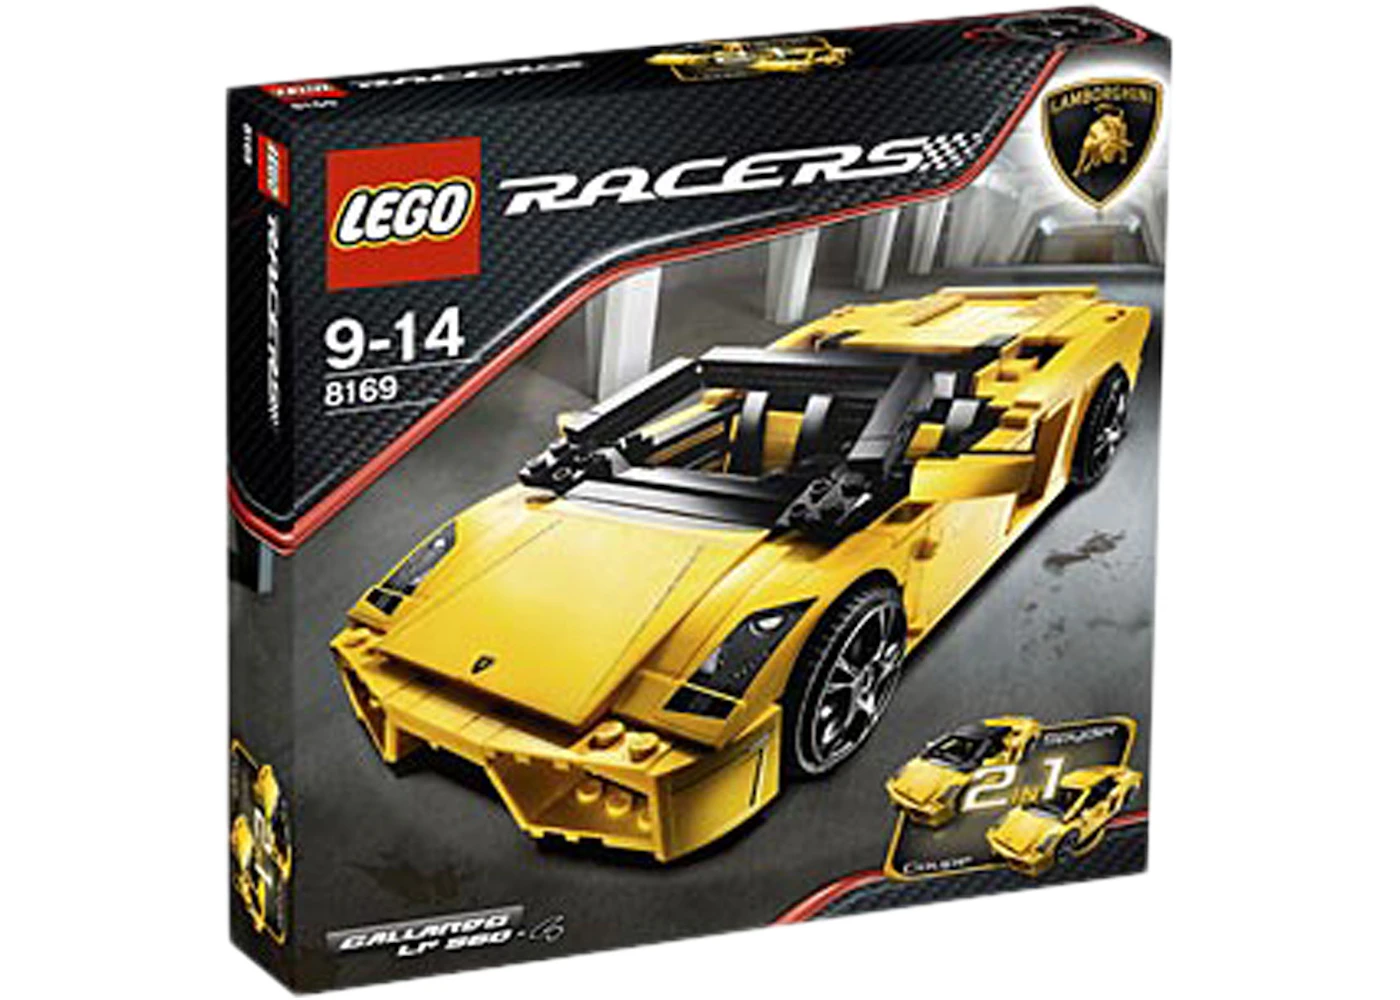 LEGO Racers Lamborghini Gallardo LP 560-4 Set 8169 - US